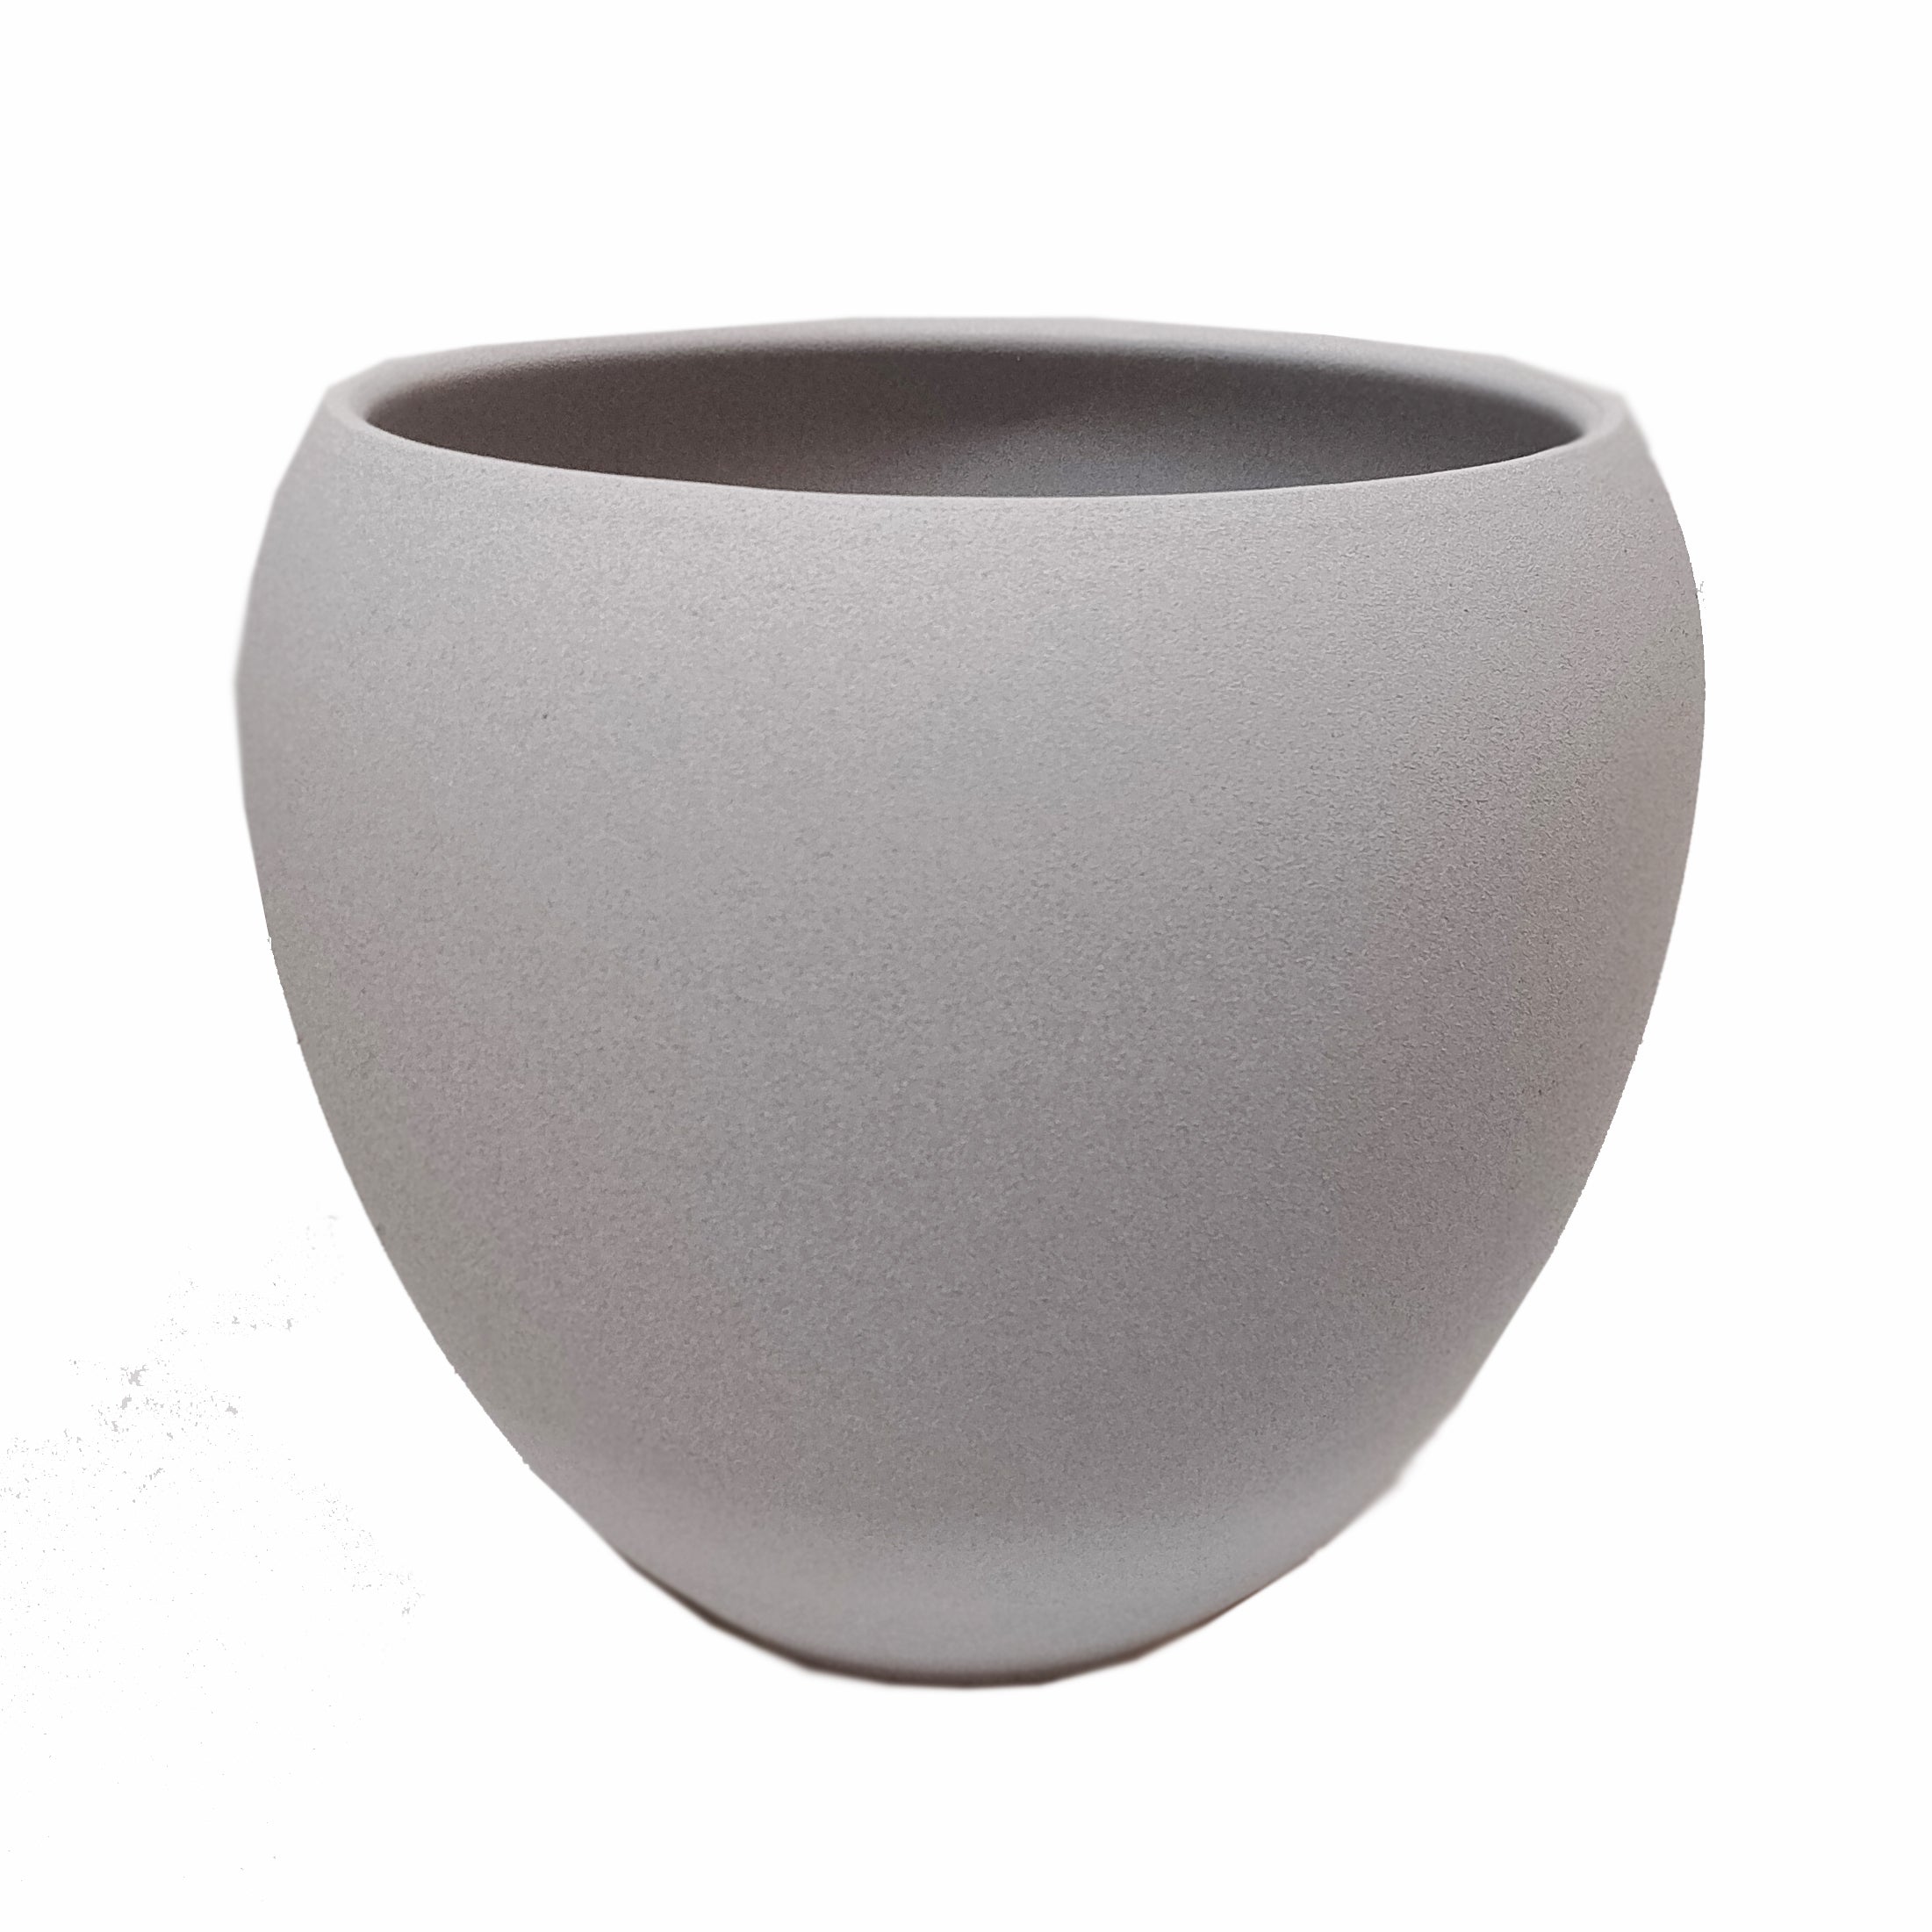 Vinci Grey Rounded Flower Pot - Ceramic Plant Pot